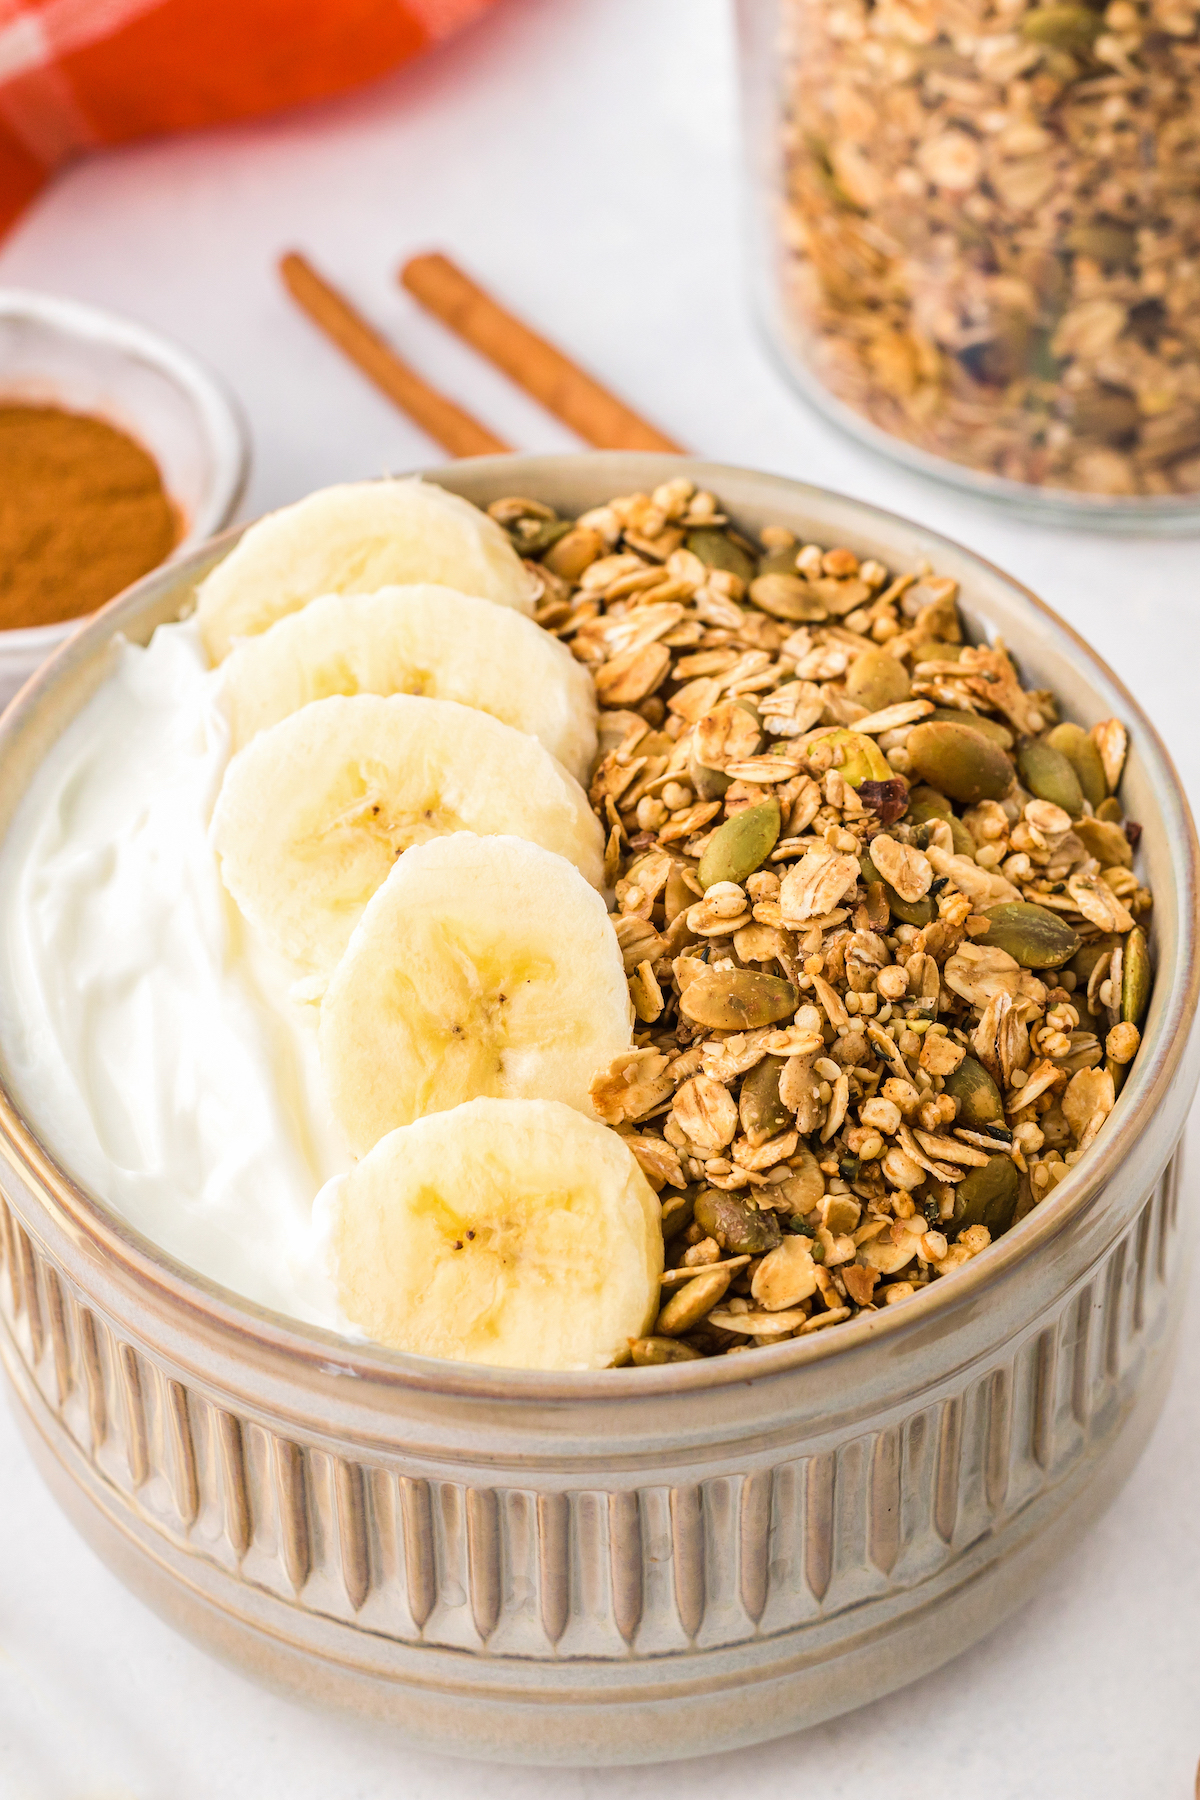 Homemade granola in a small dish with yogurt and bananas.